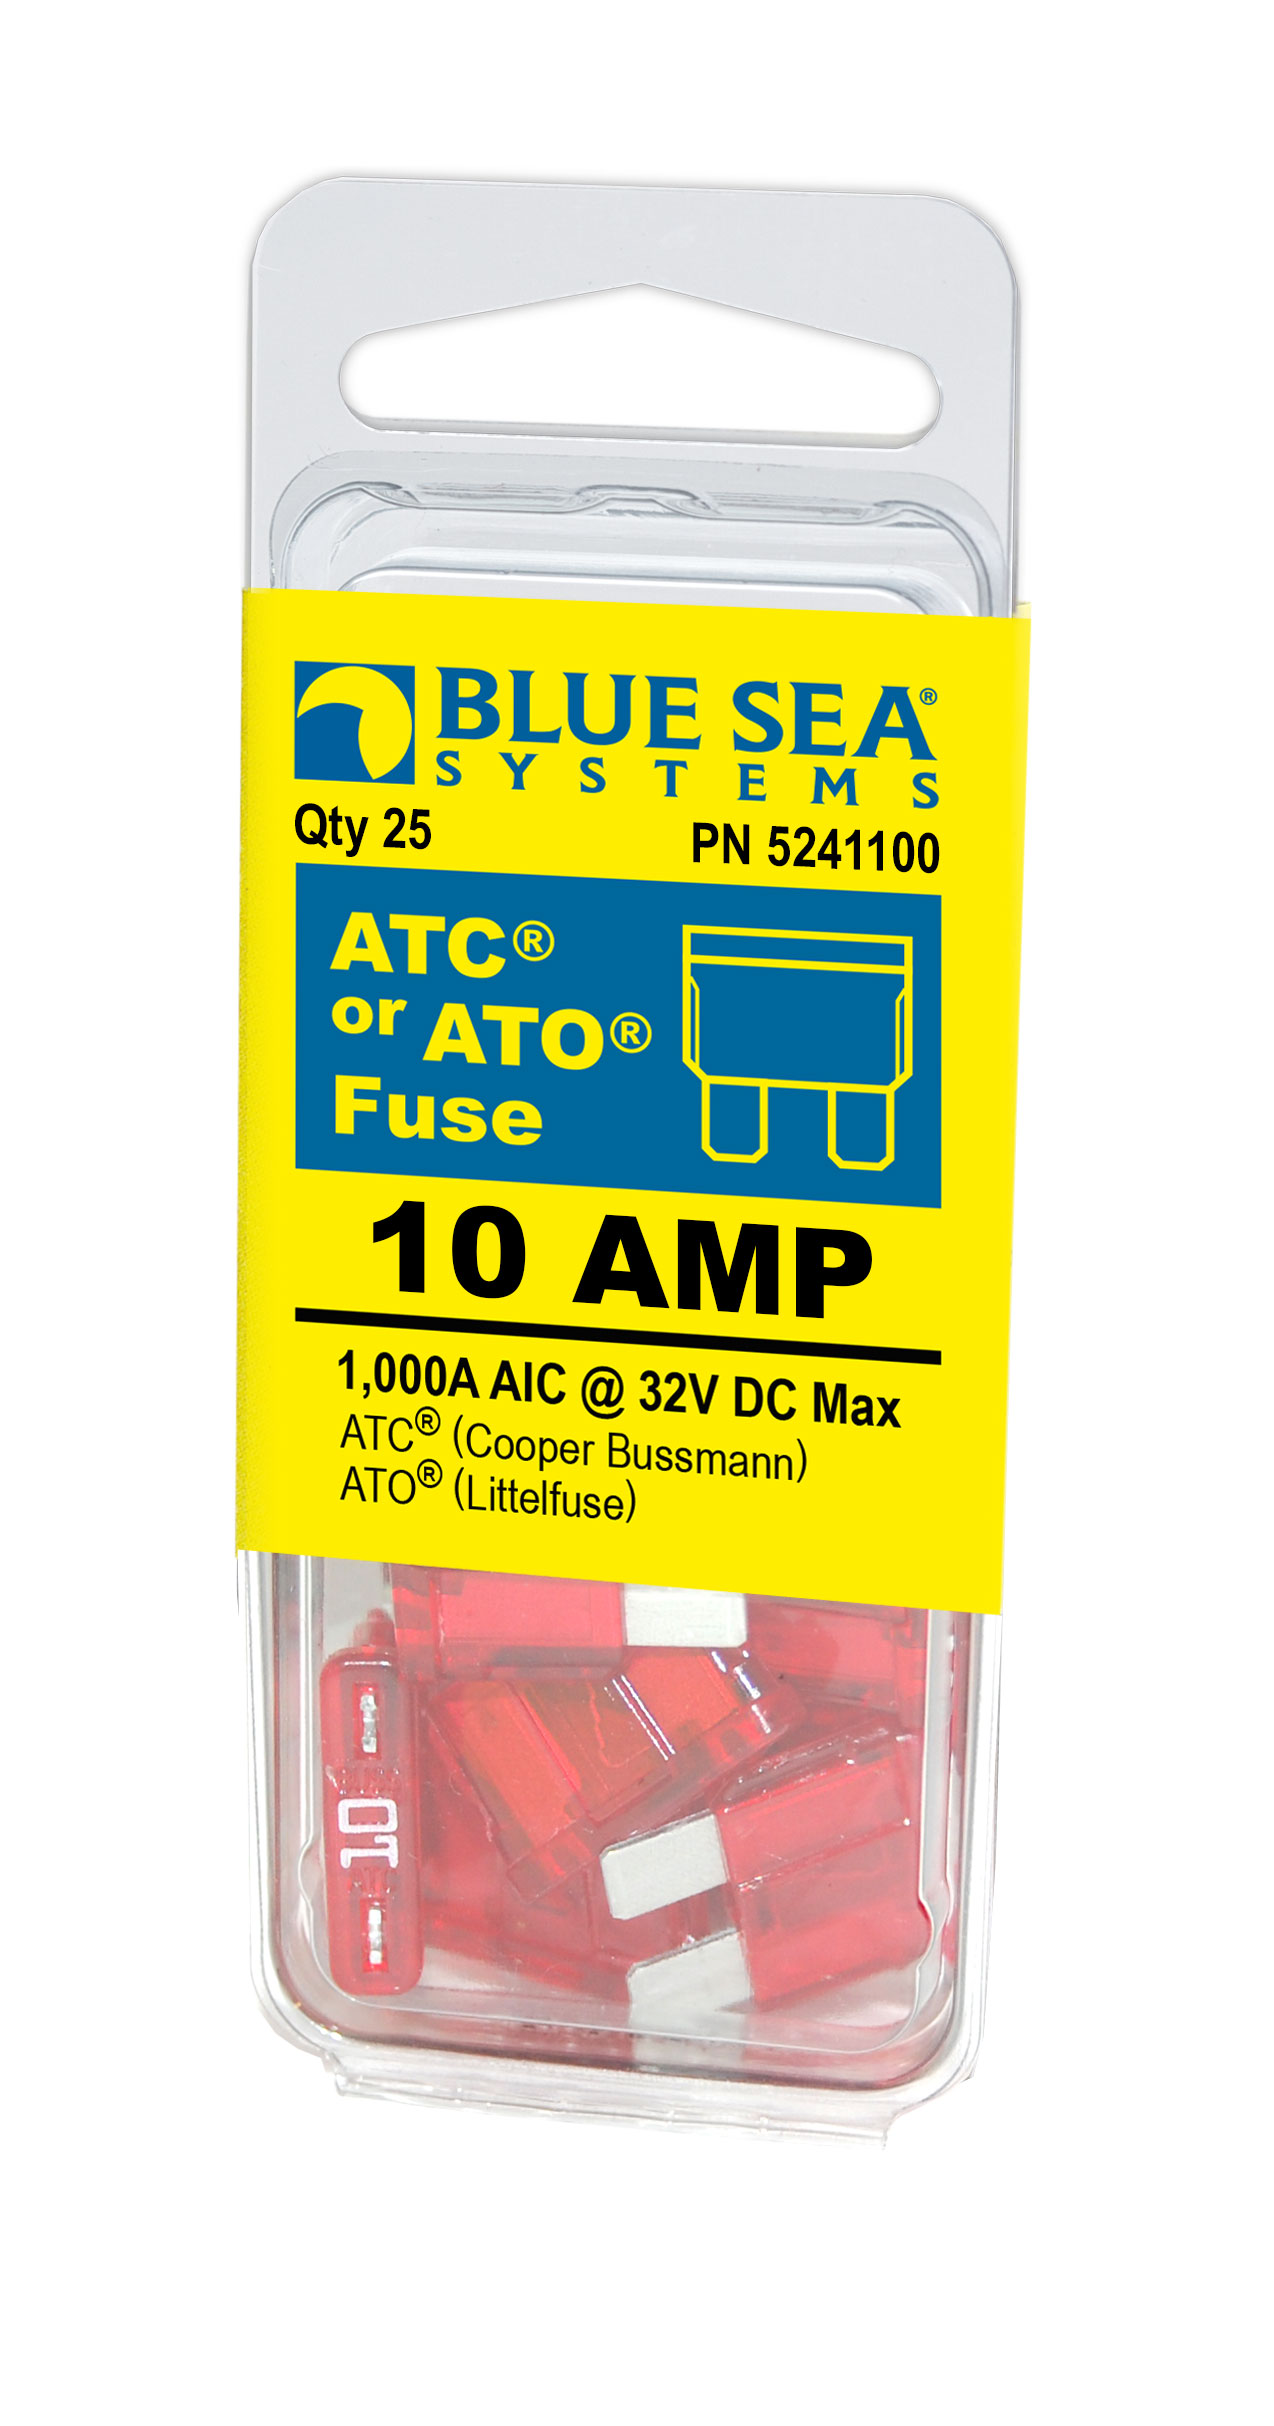 Part# 5241100  Manufacturer Blue Sea Systems  Part Type Fuse